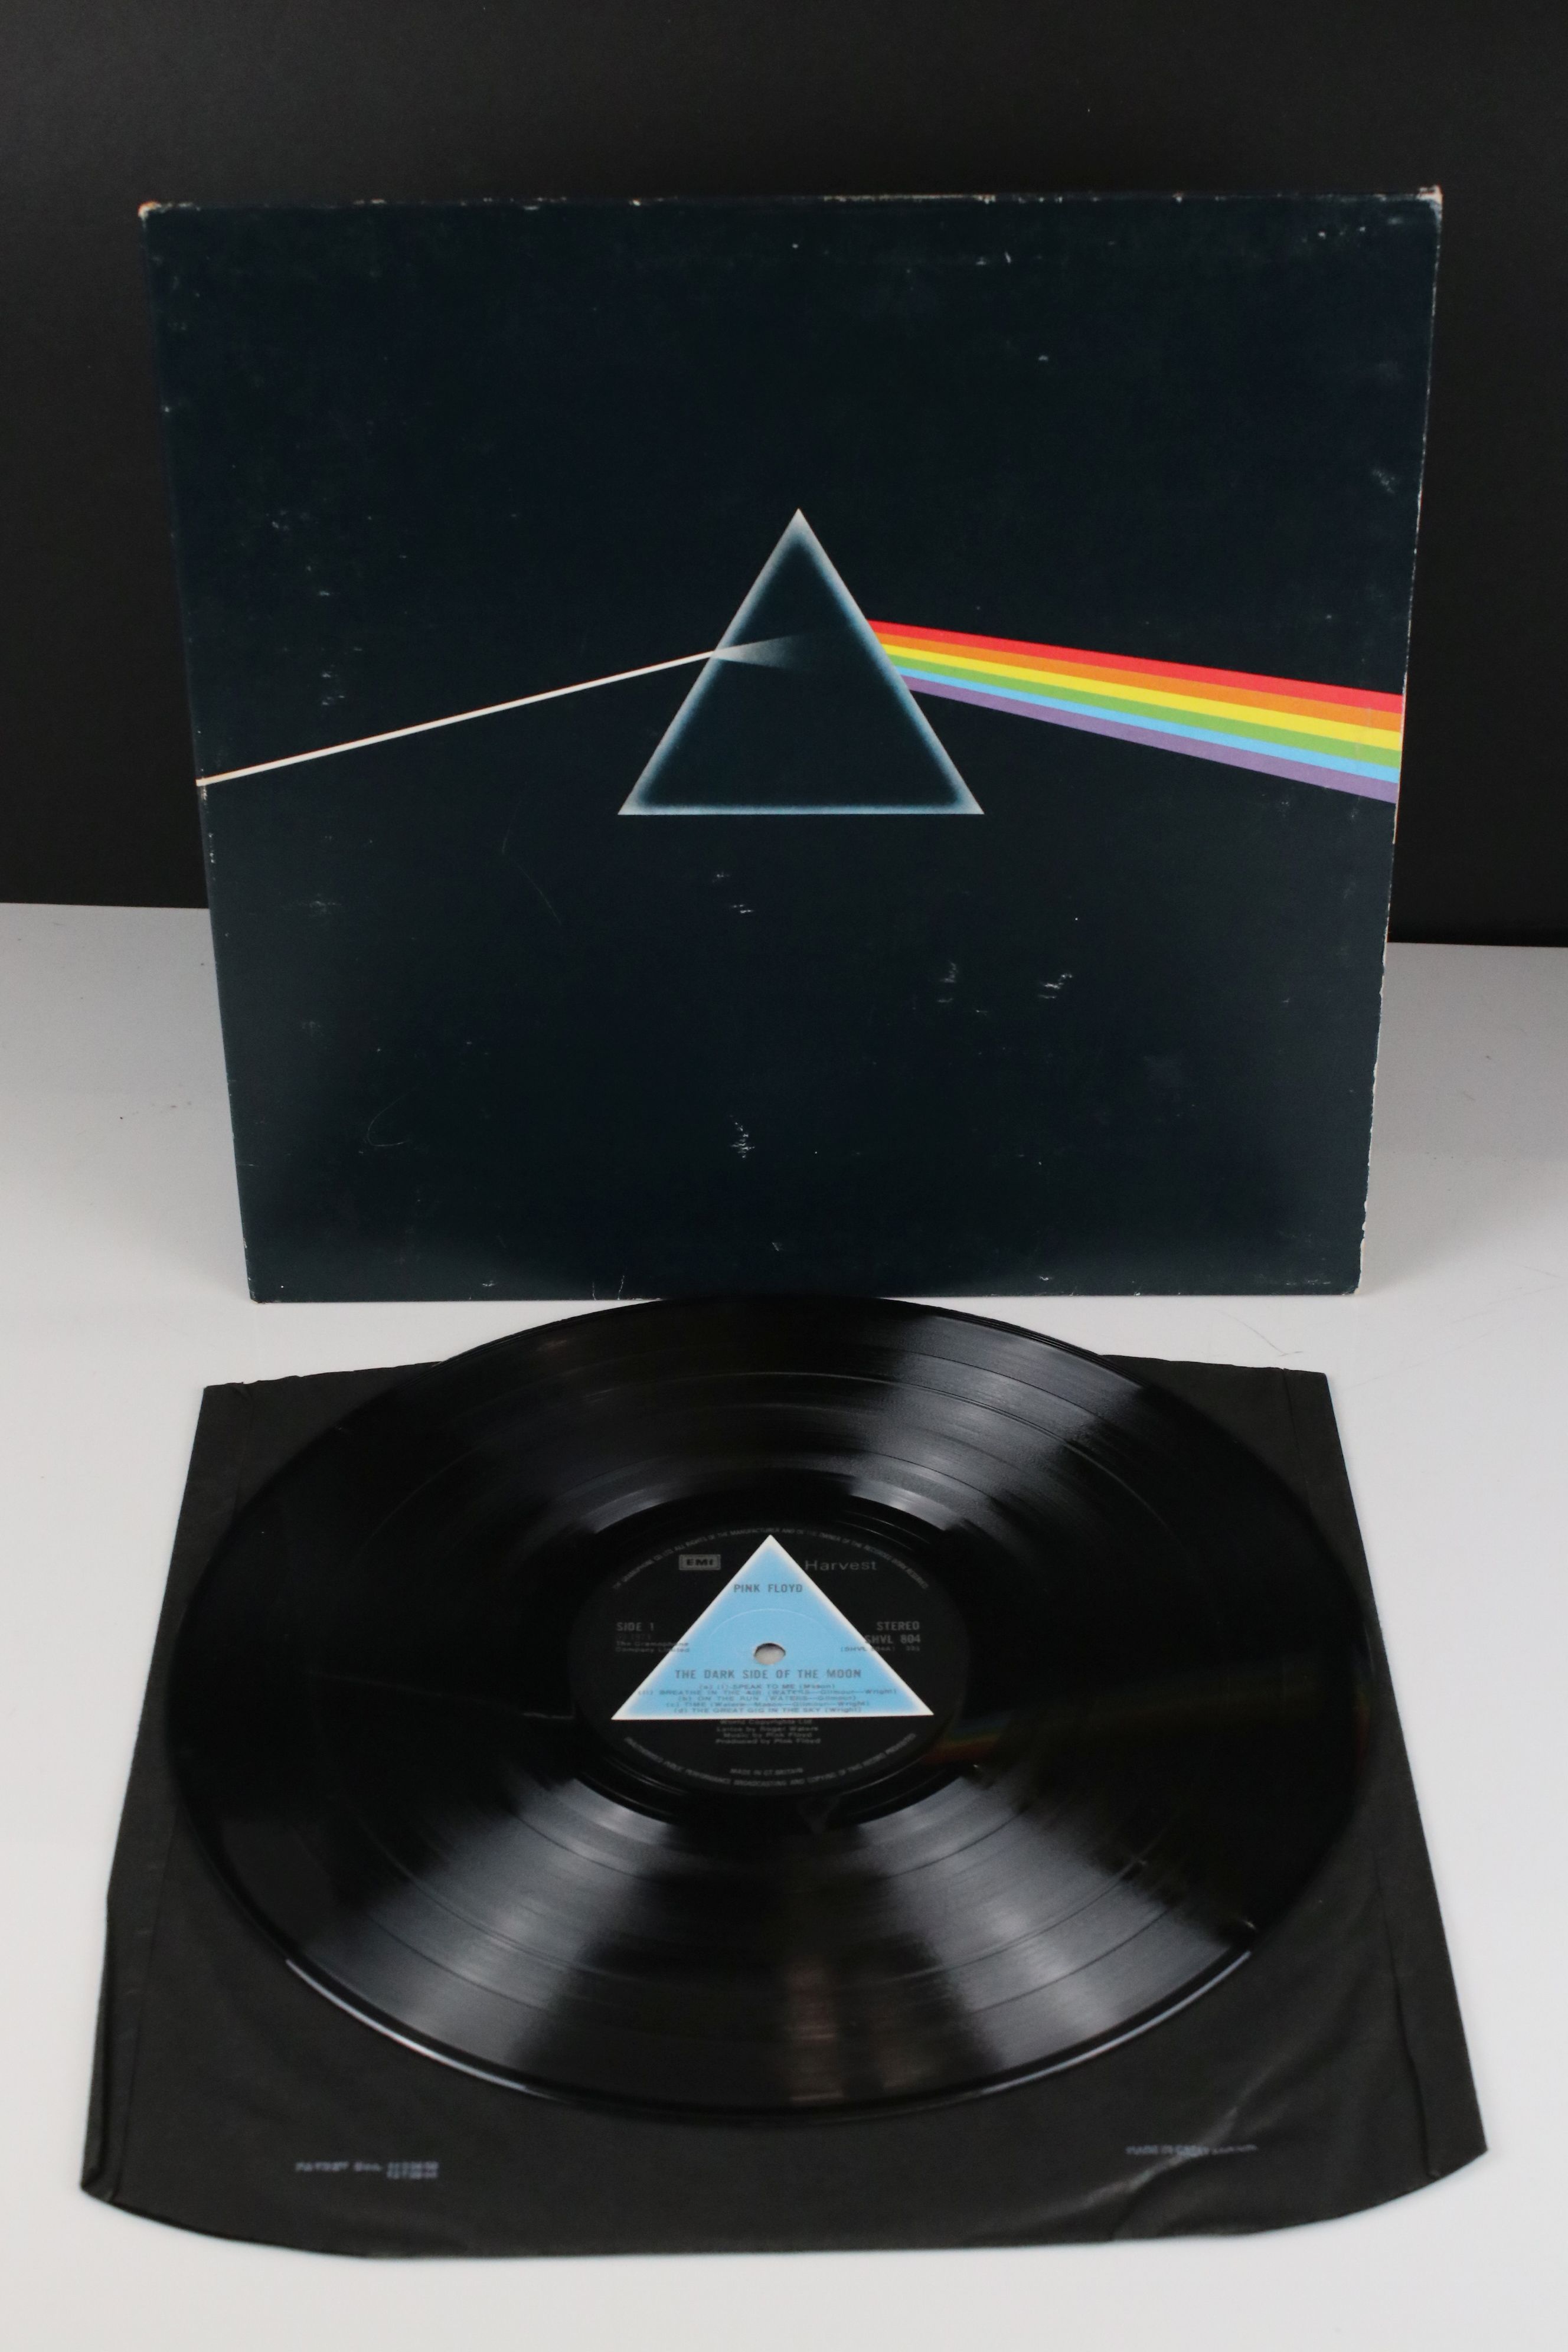 Vinyl - Pink Floyd Dark Side of The Moon LP on Harvest SHVL804 Stereo, solid light blue triangle, no